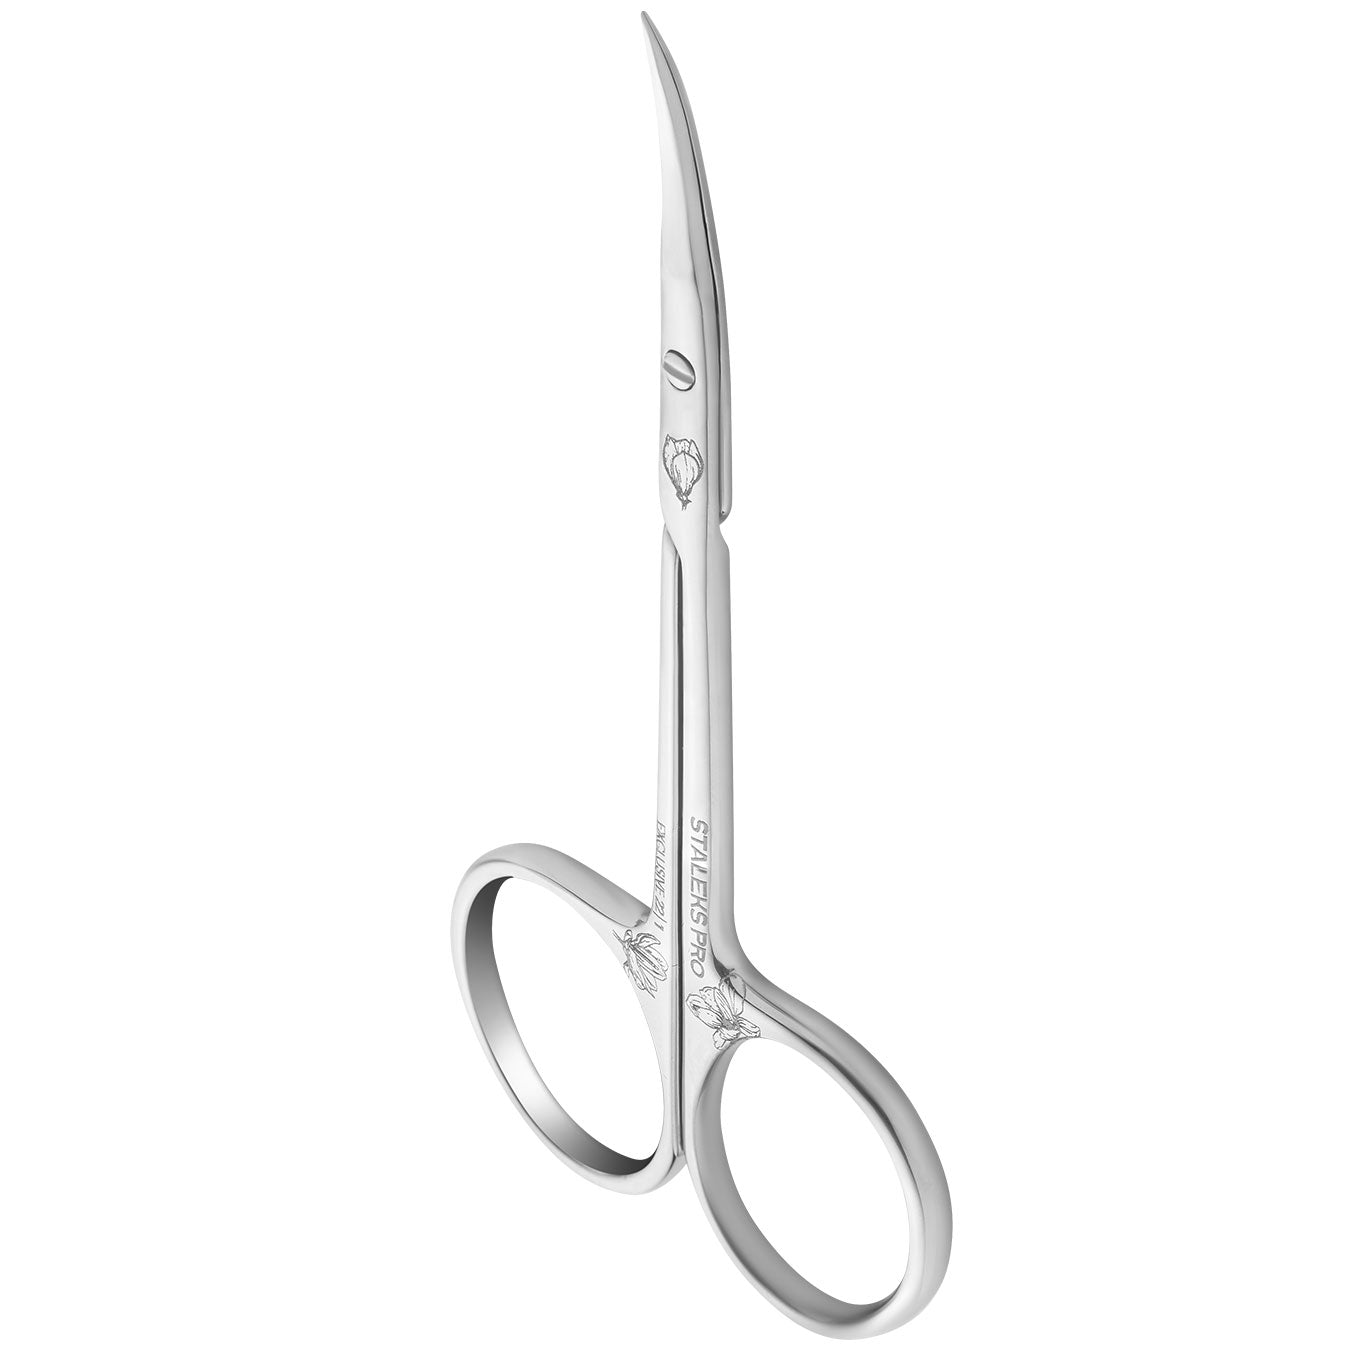 Trim Professional Quality Cuticle Scissors 1 Count